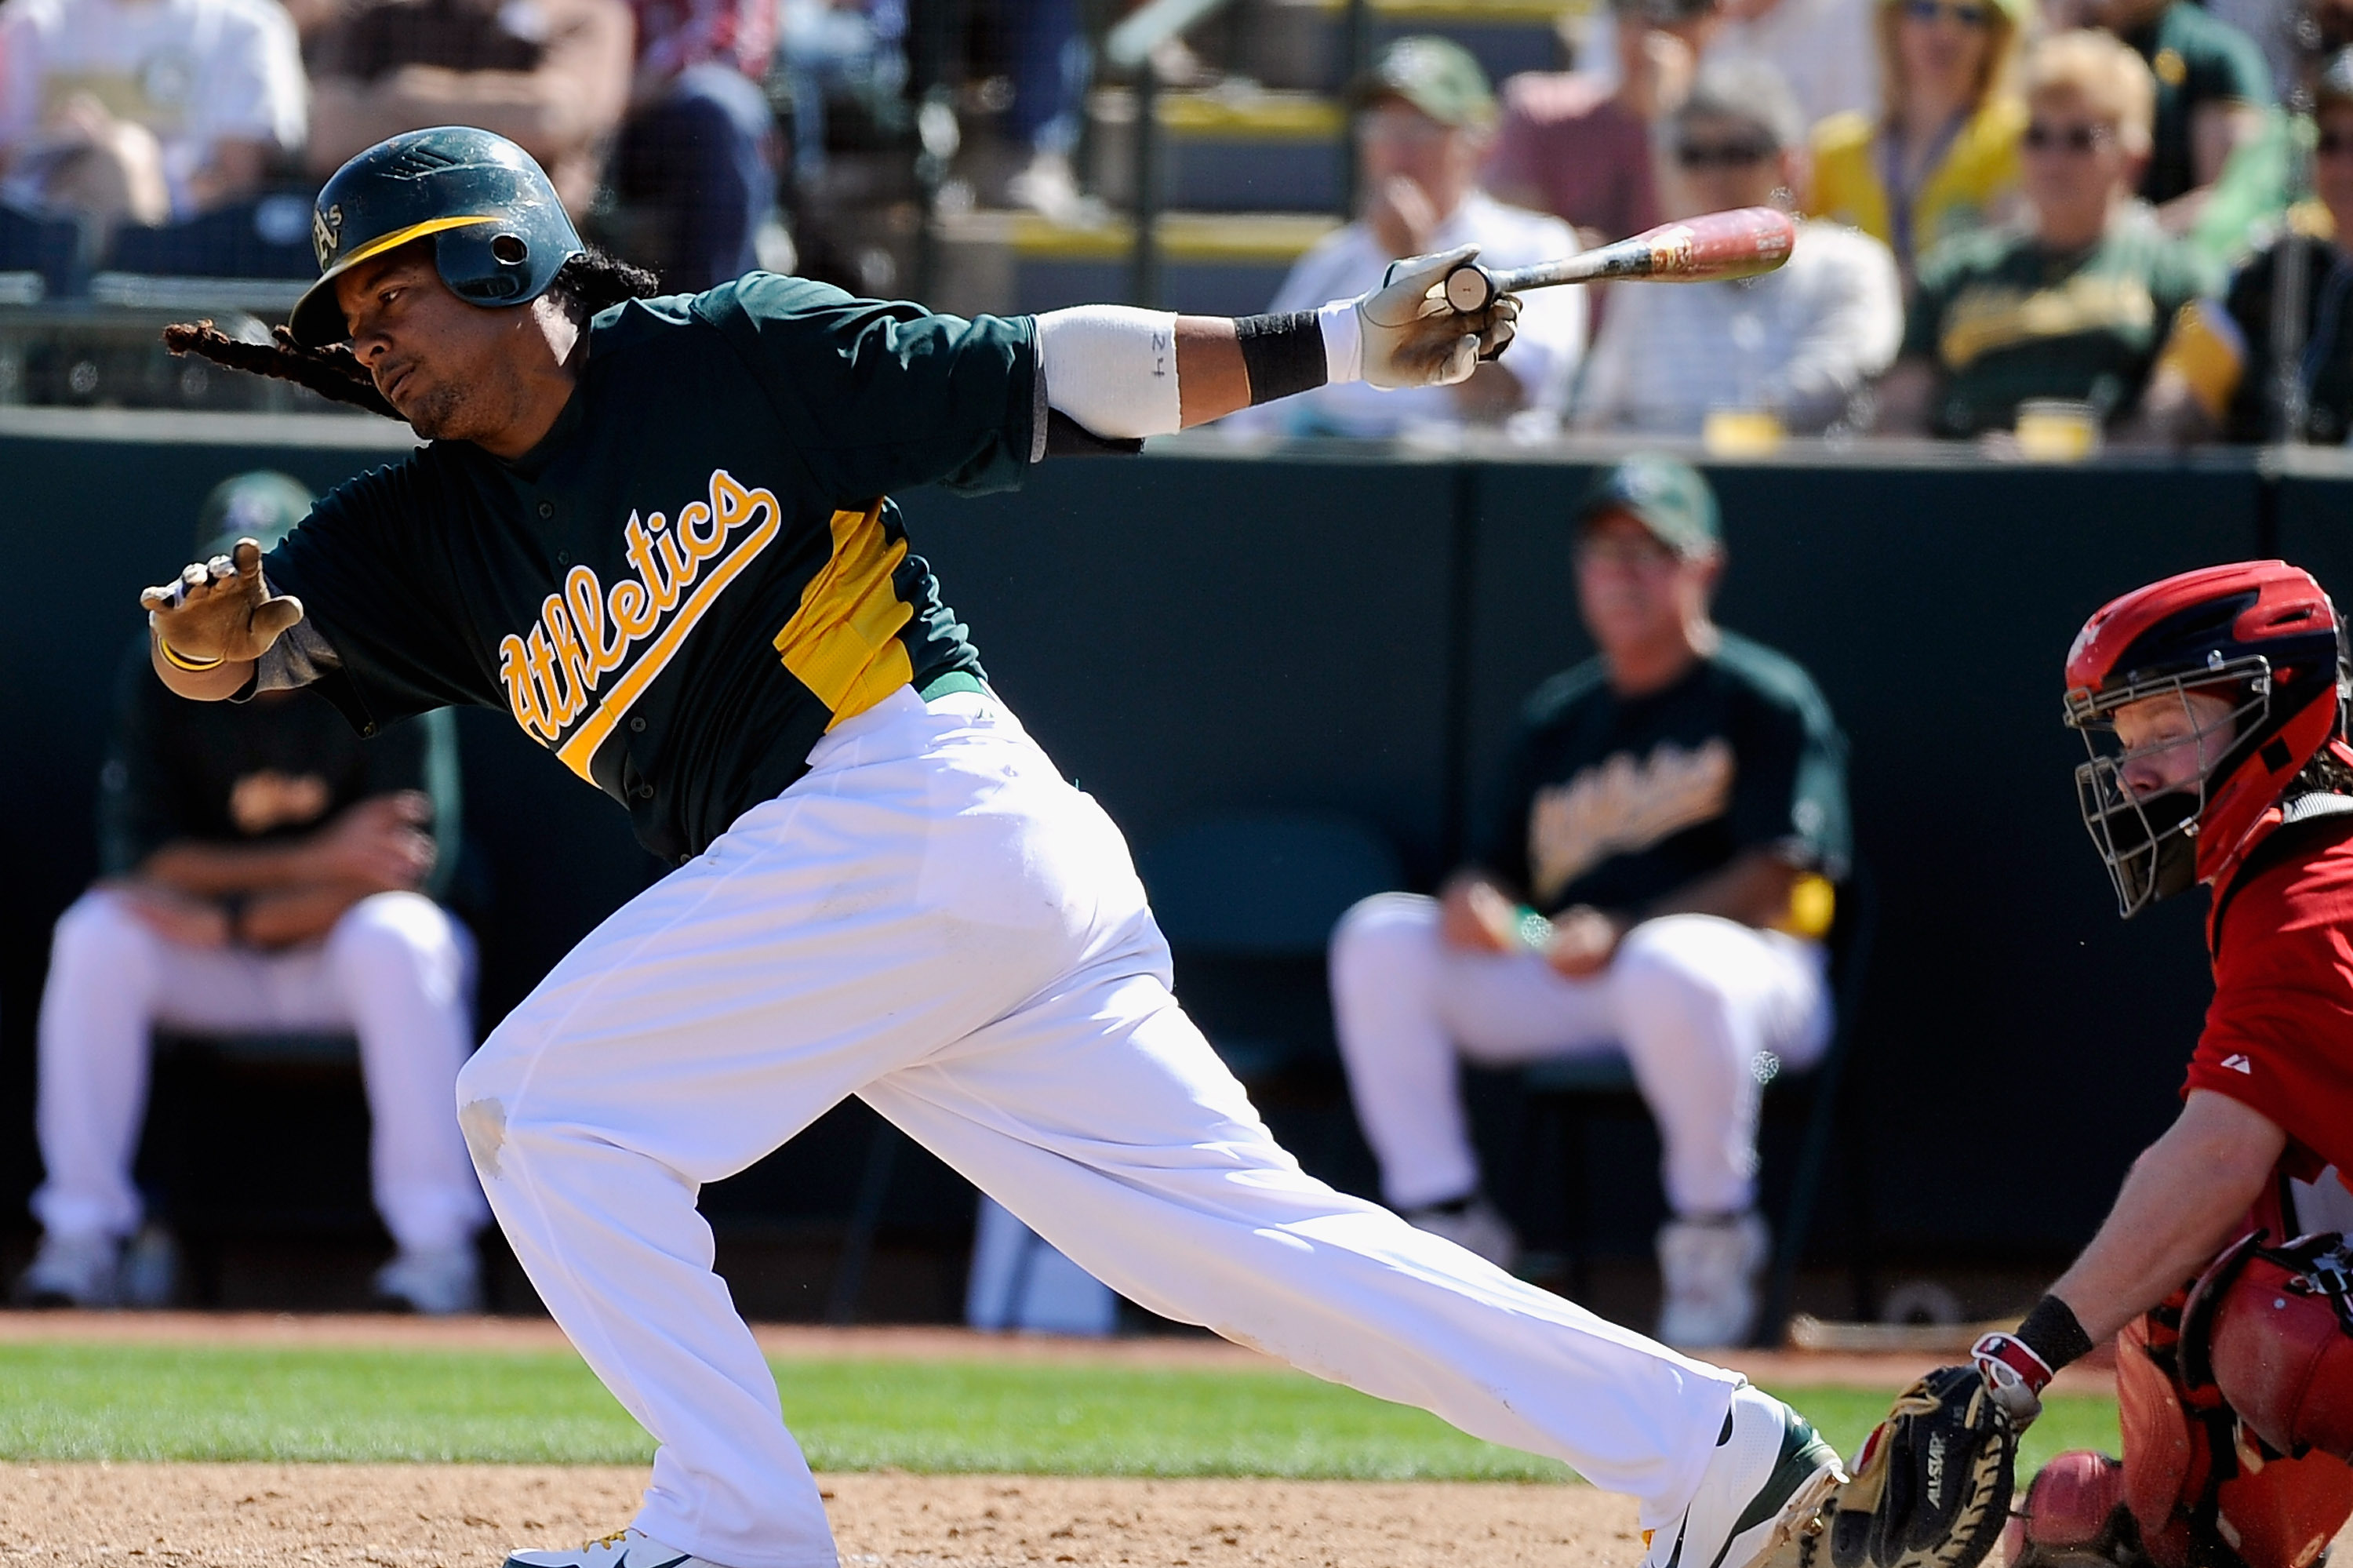 Fantasy Baseball: Is Oakland Athletics' DH Manny Ramirez Worth